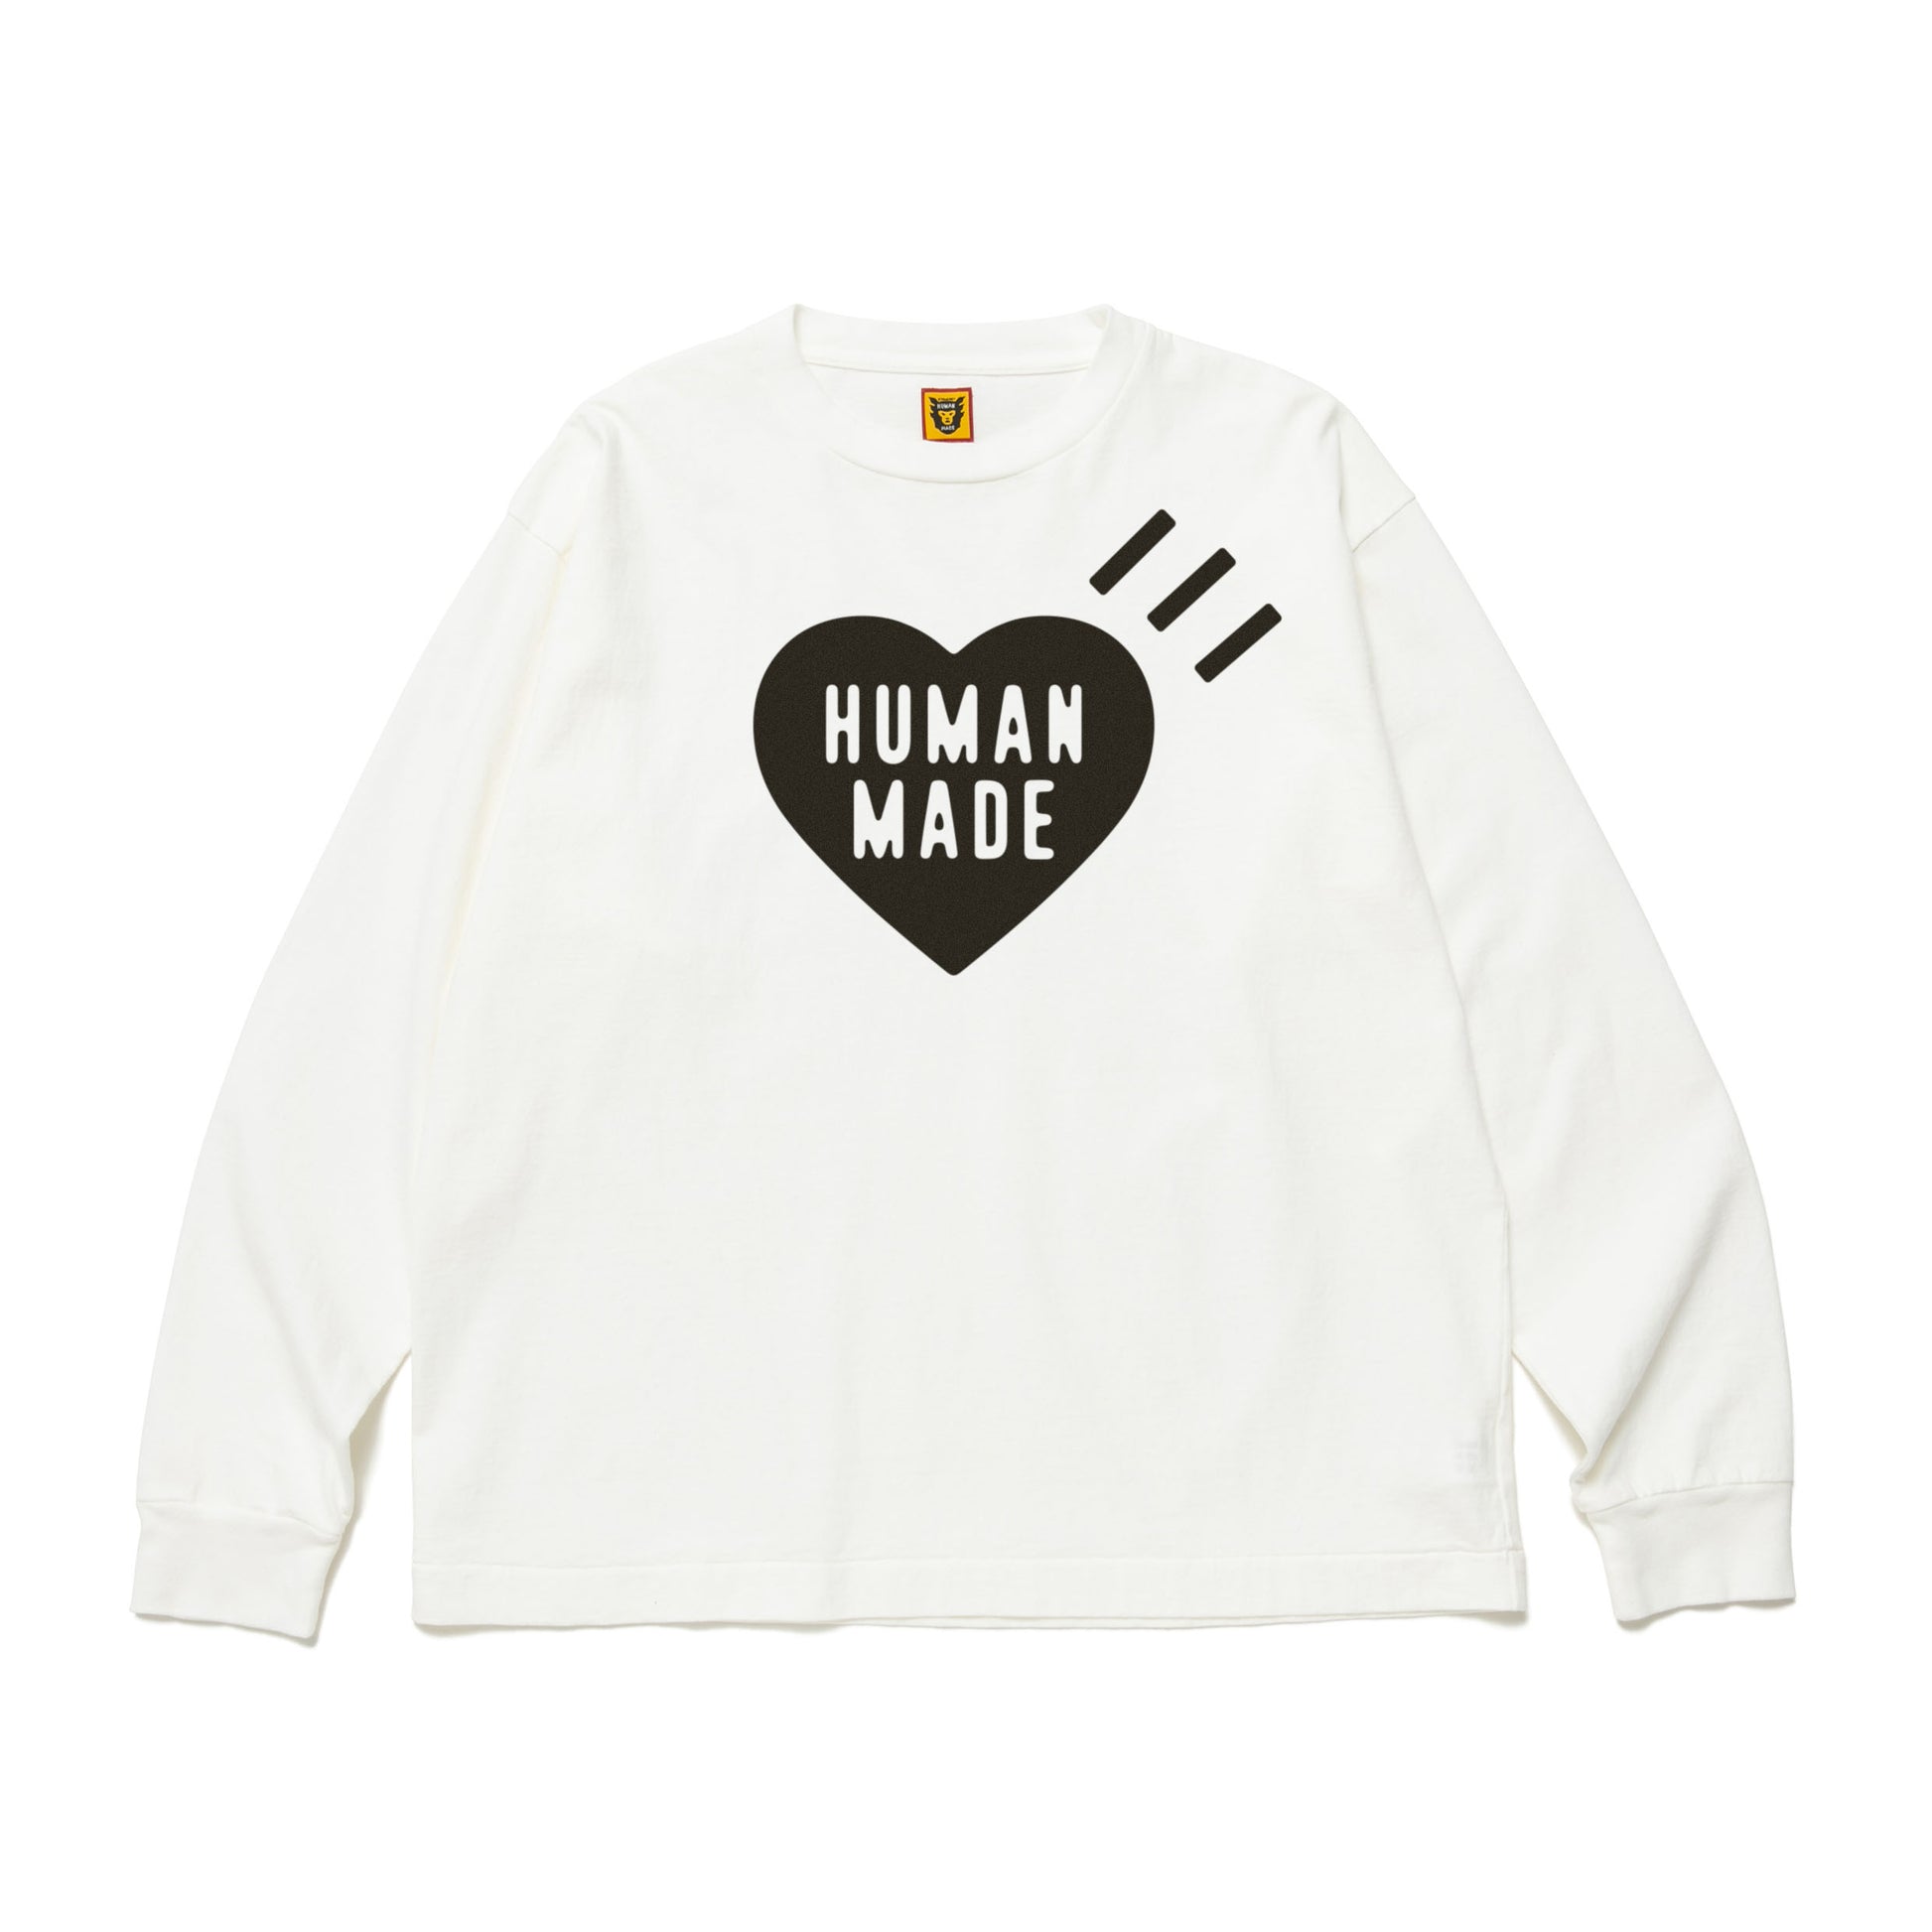 humanmade